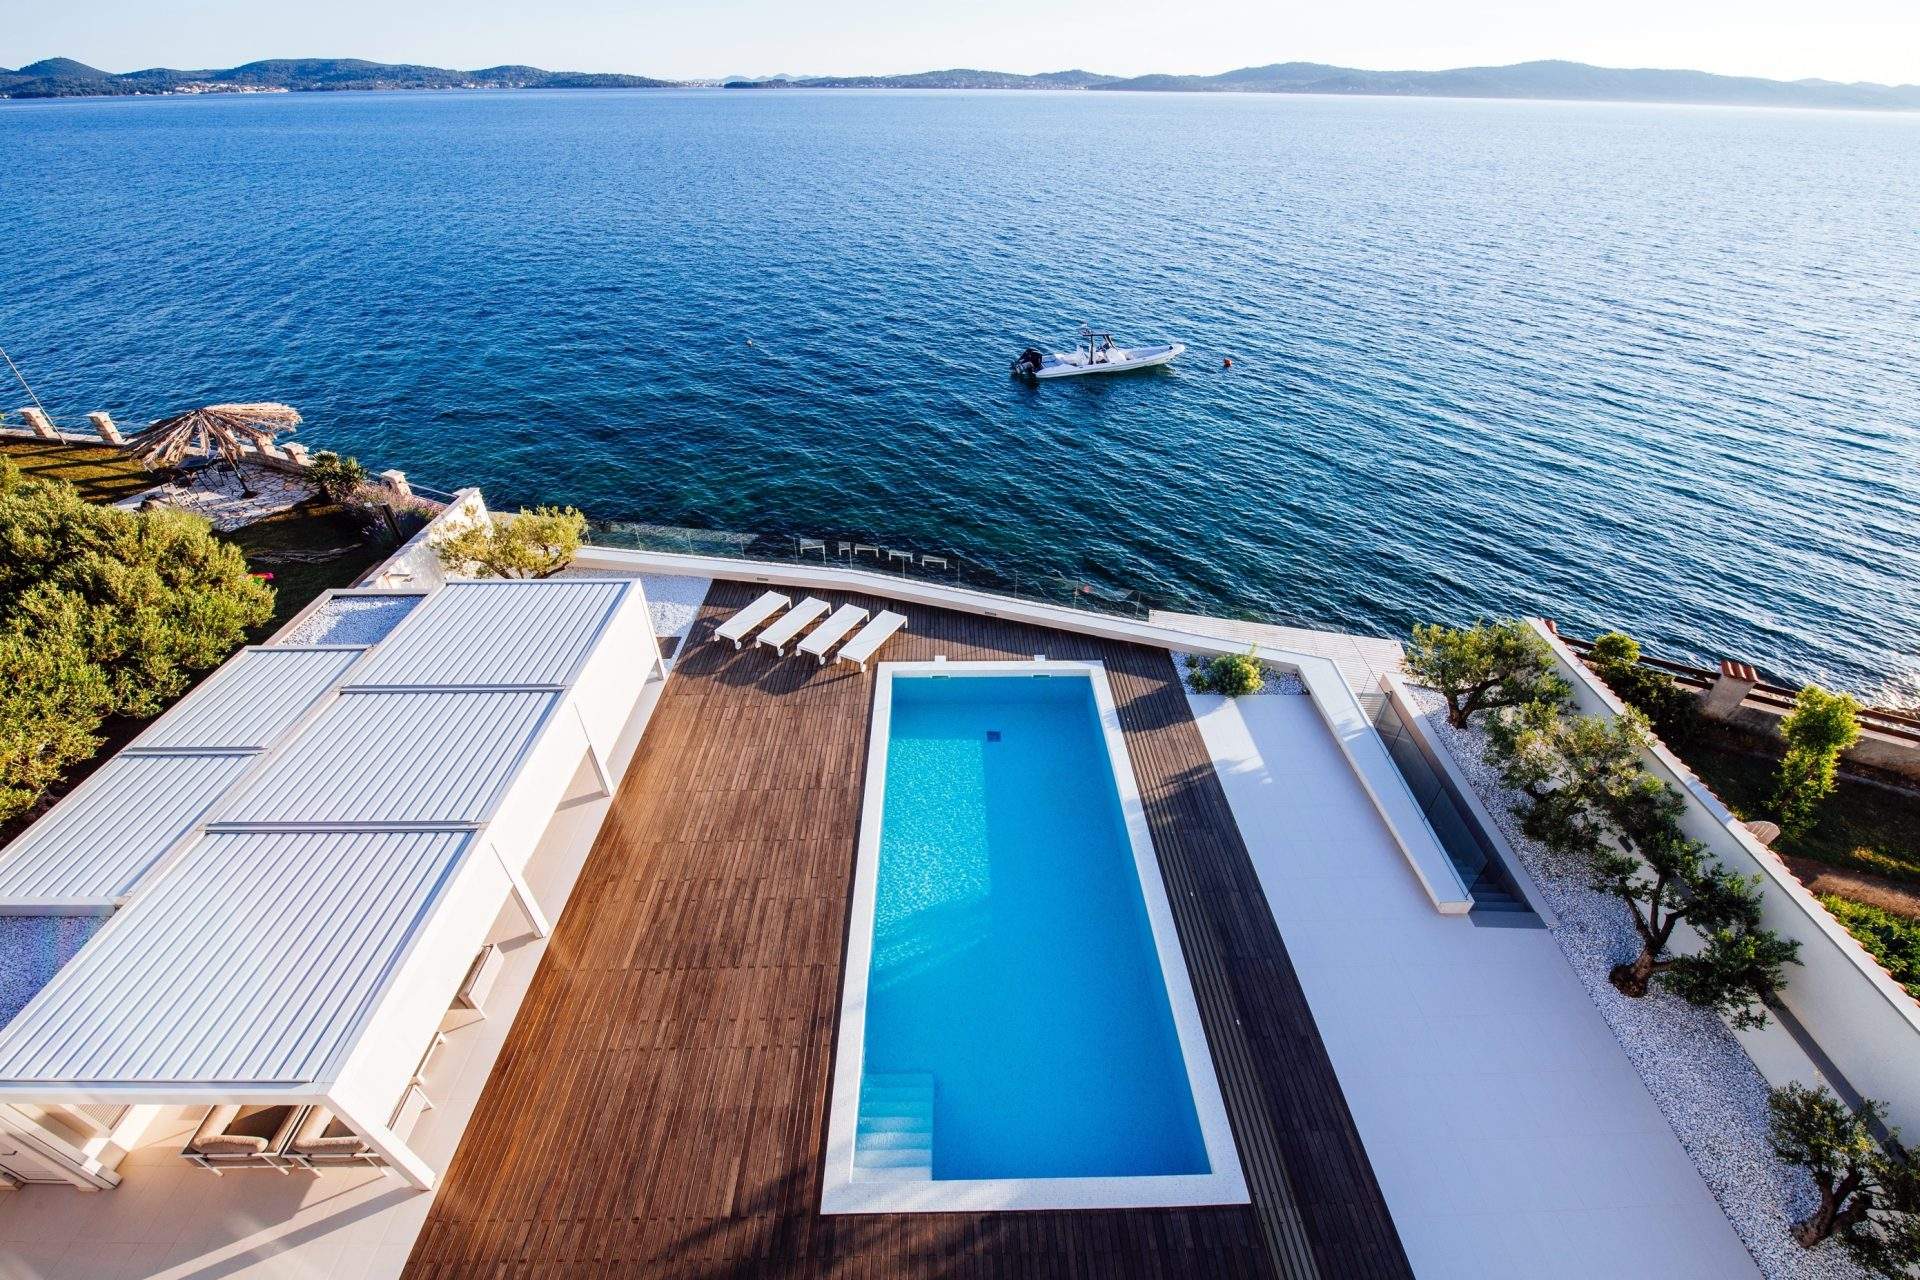 Rent a Villa in Croatia | 8 Irresistible Reasons to Visit Croatia